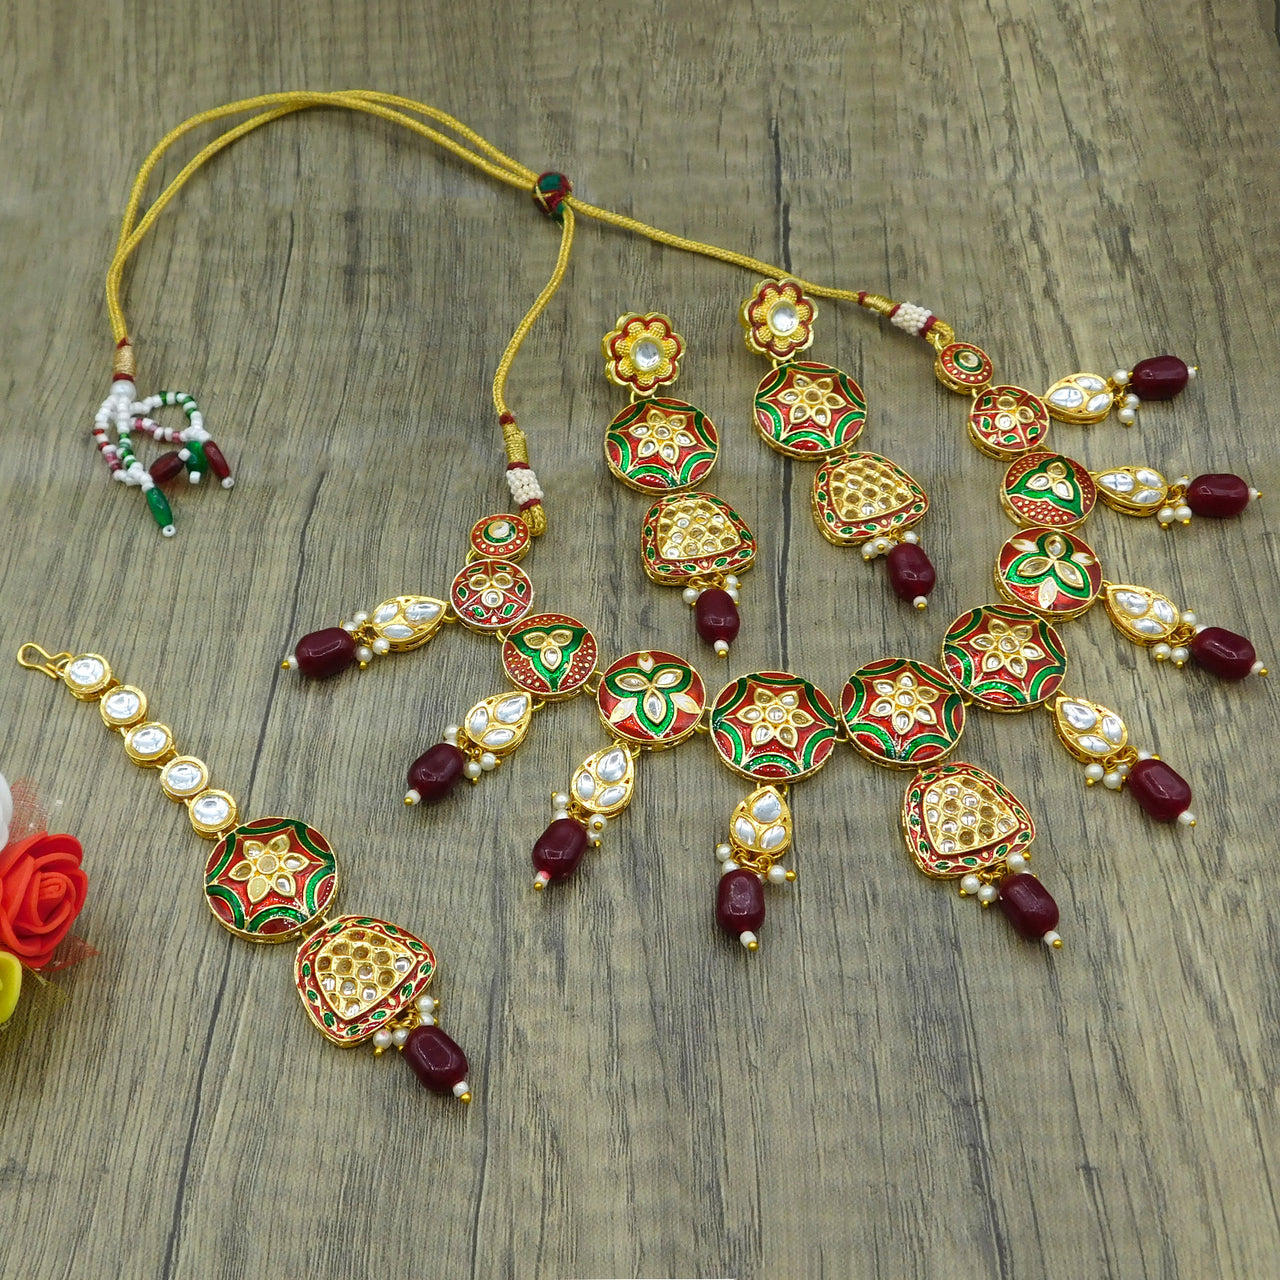 Sujwel Kundan and Meenakari Necklace Set (08-0471)